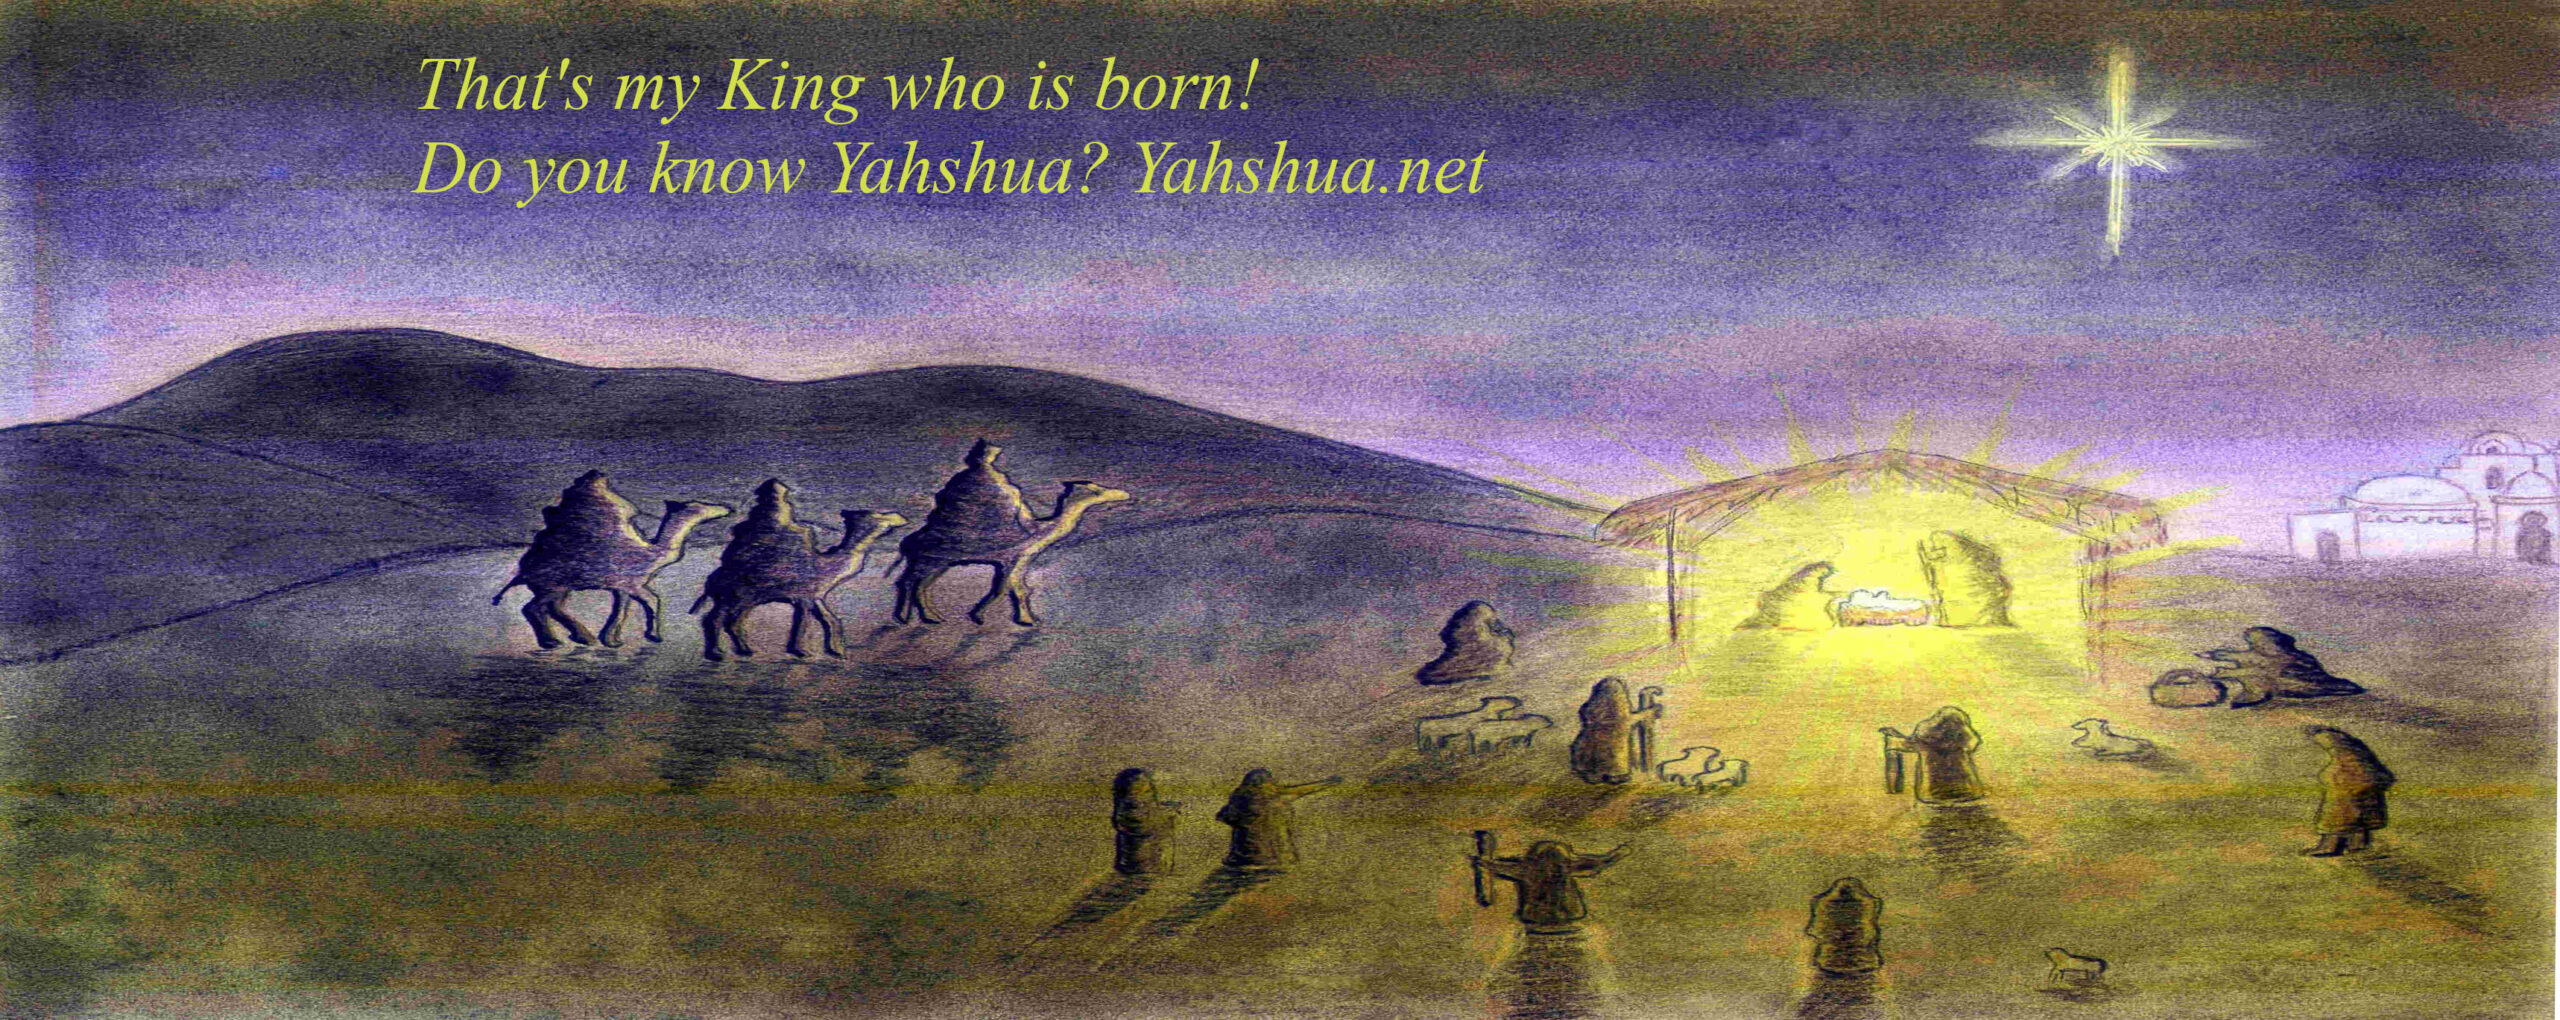 Yahshua.net risen